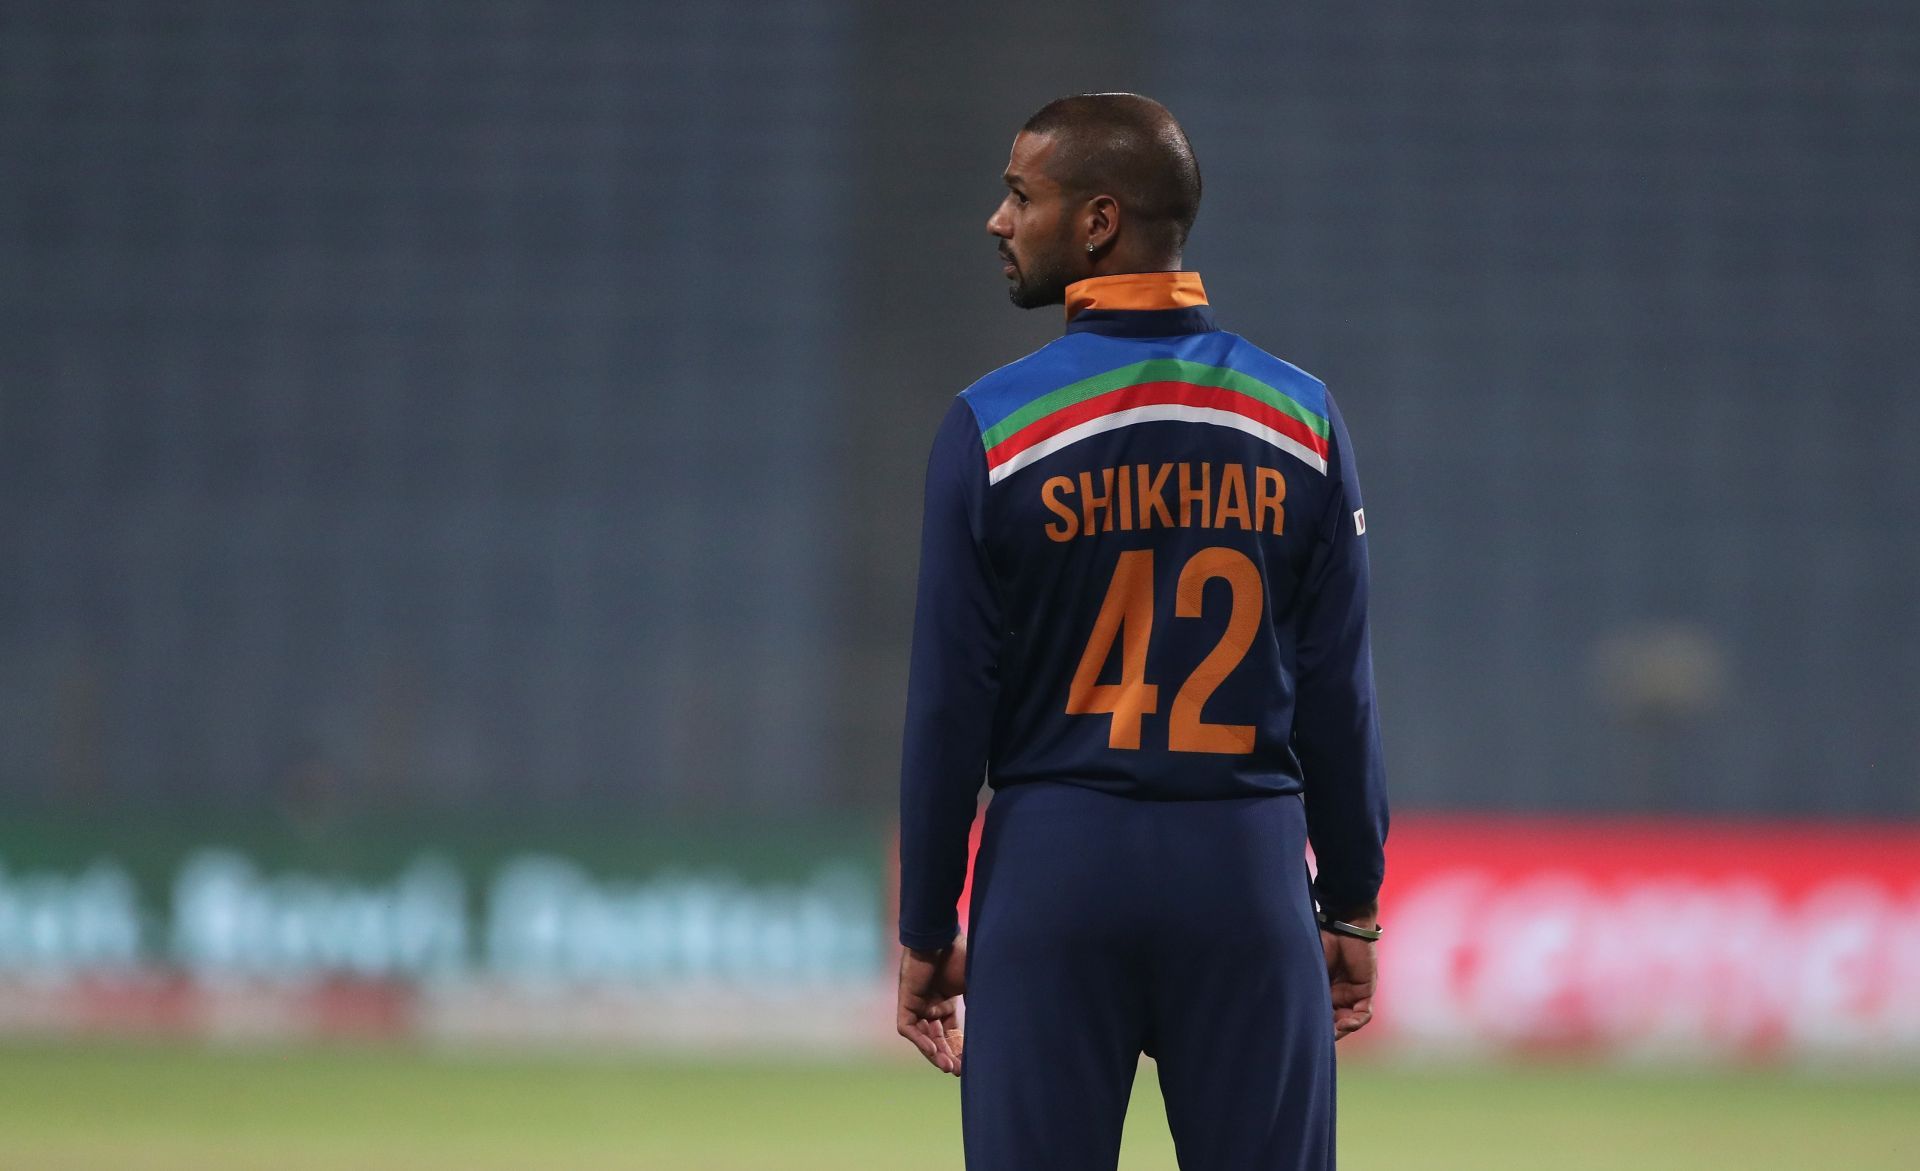 Shikhar Dhawan intends to represent India at the 2023 ODI World Cup